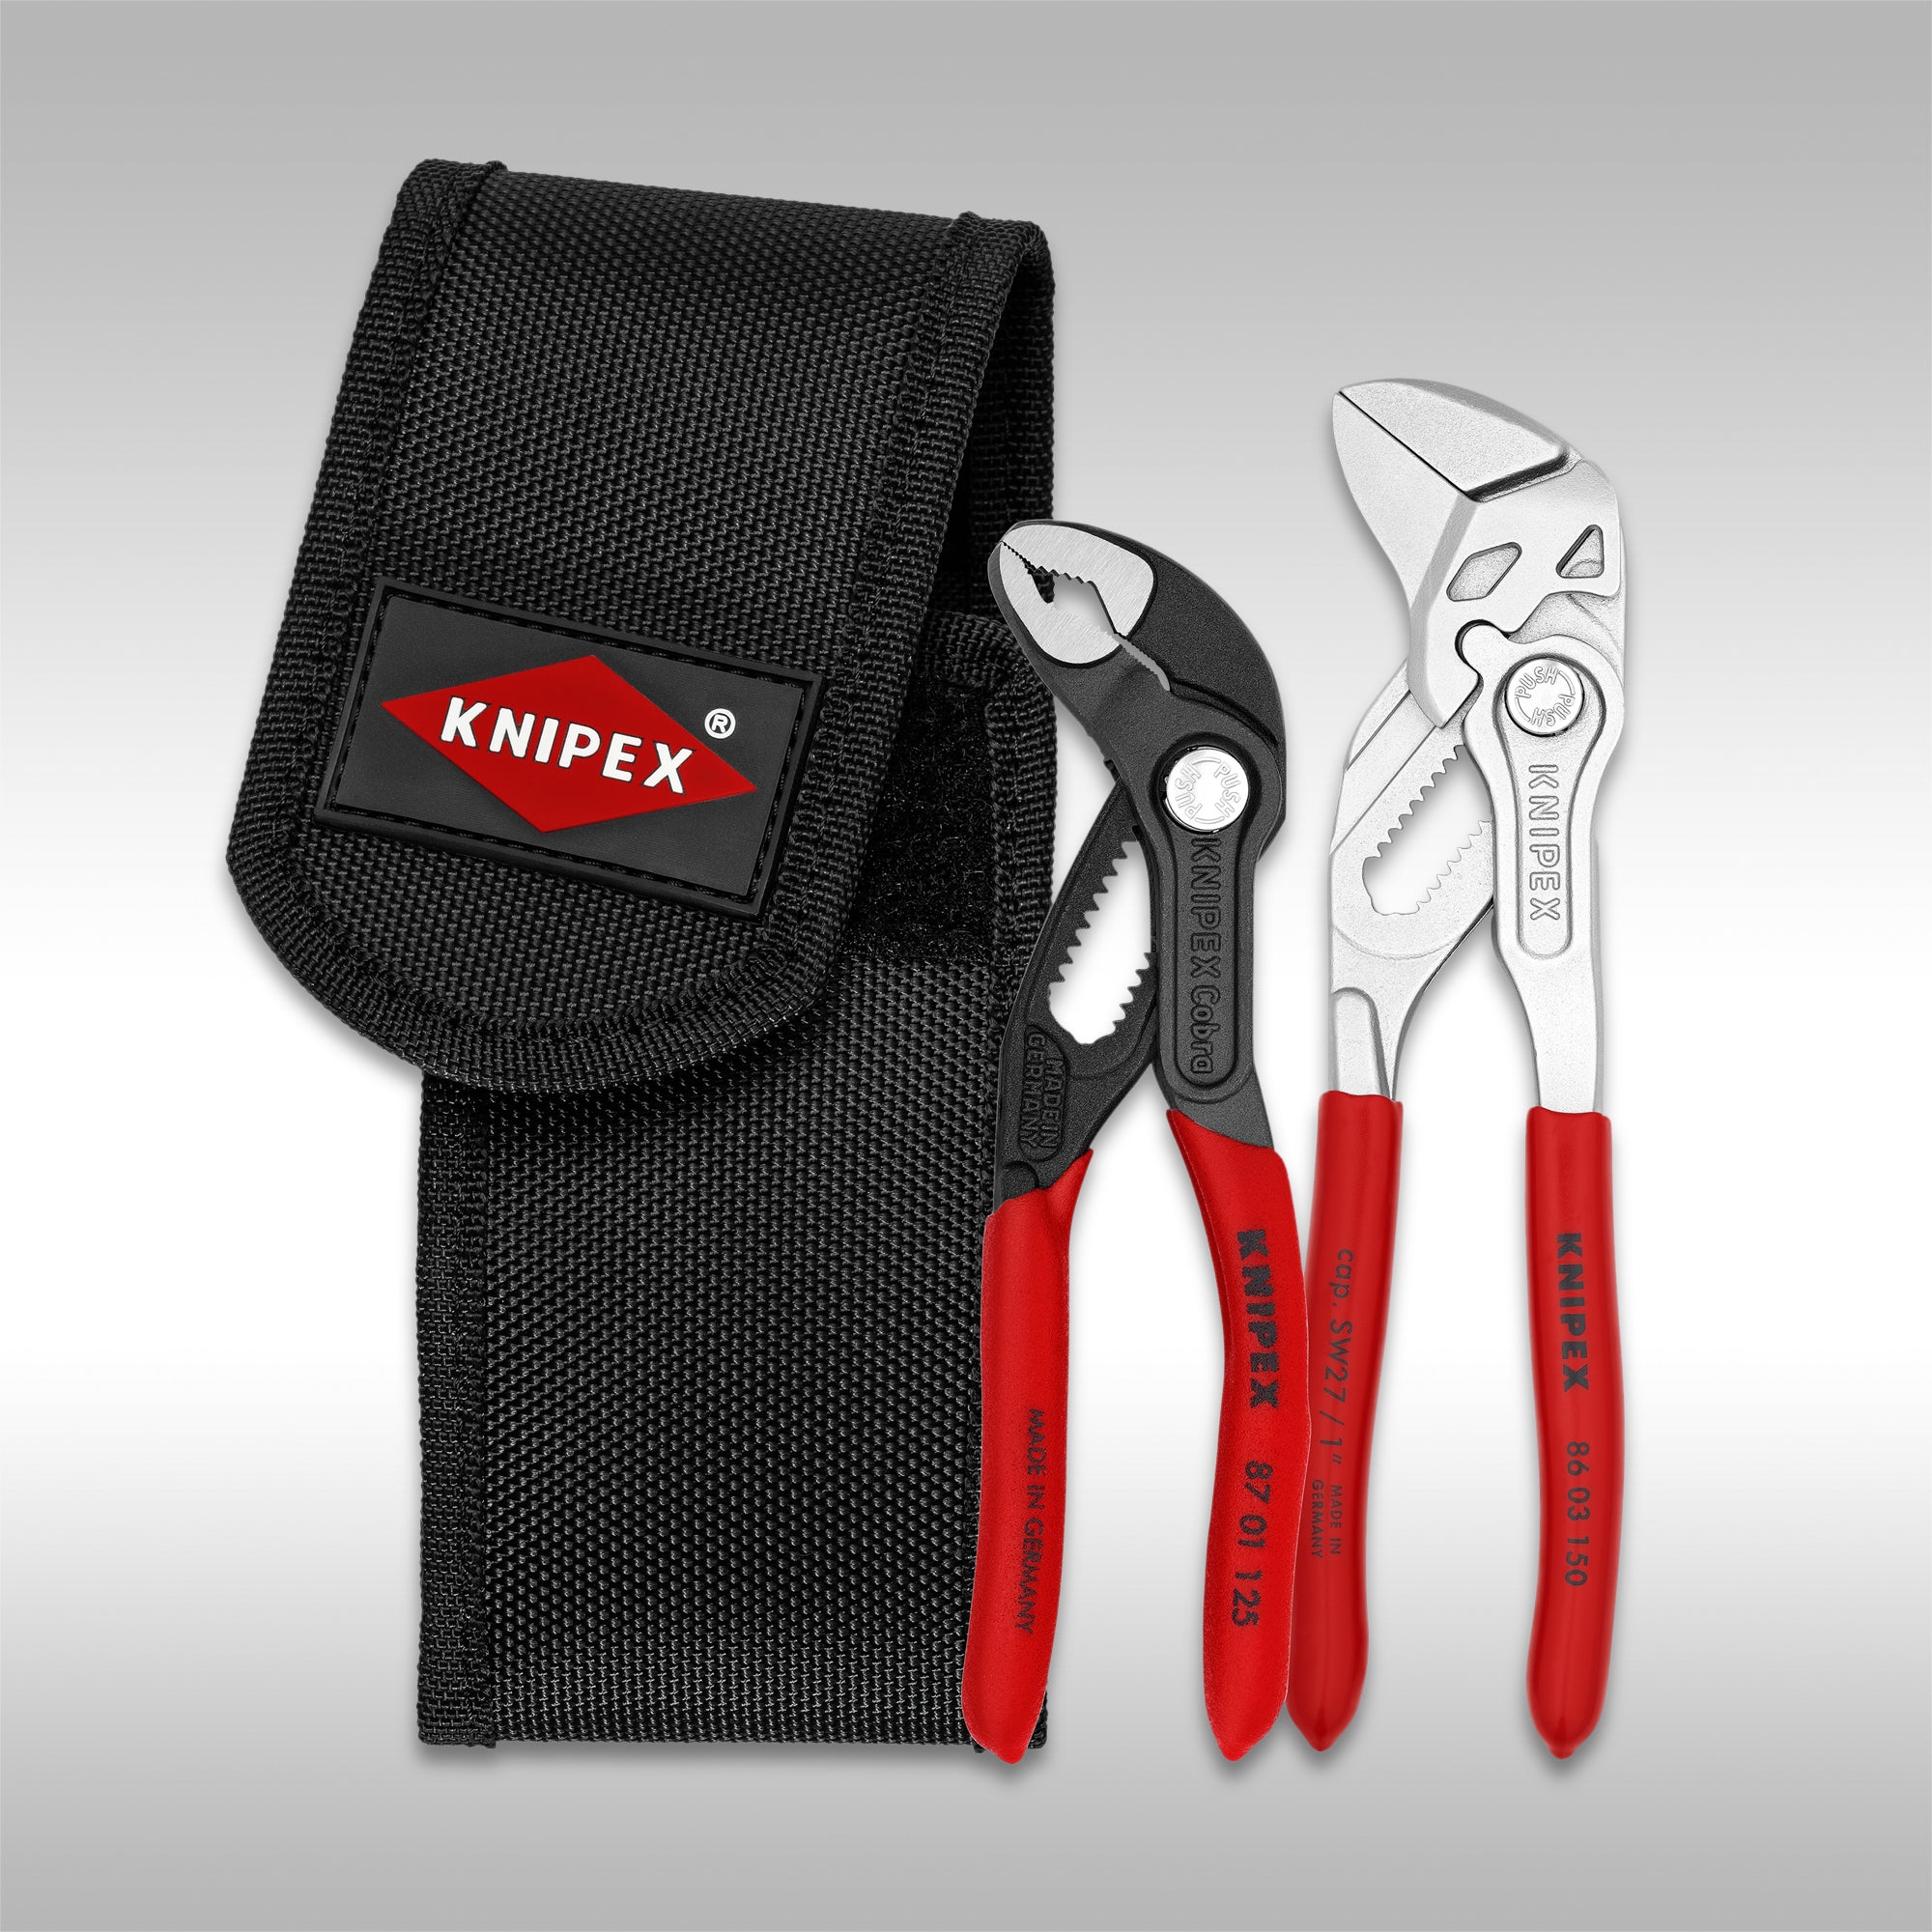 Knipex Complete 7 Pc Cobra Plier Set